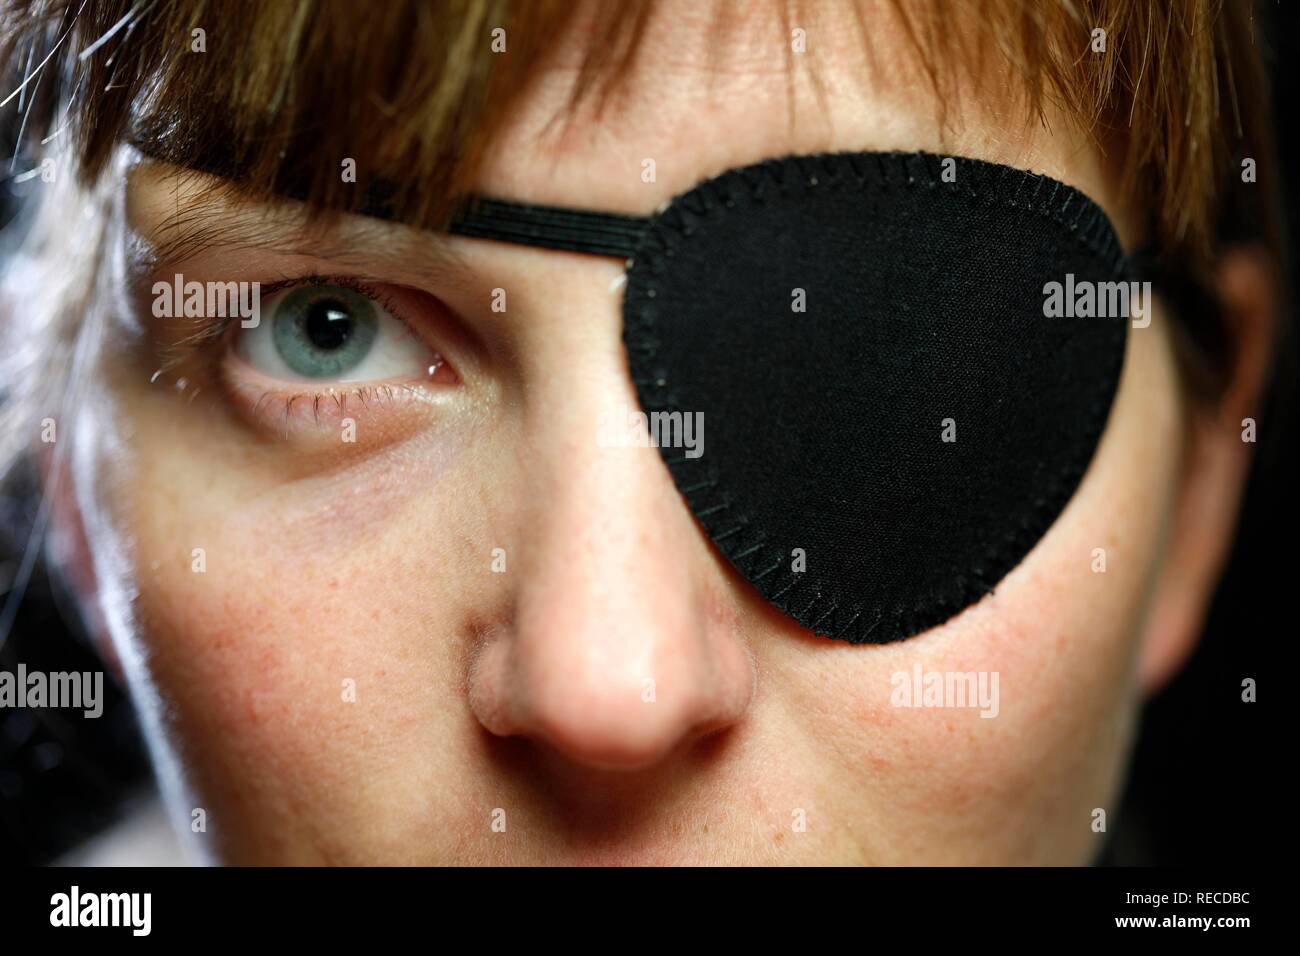 Young woman wearing a black eye patch Stock Photo